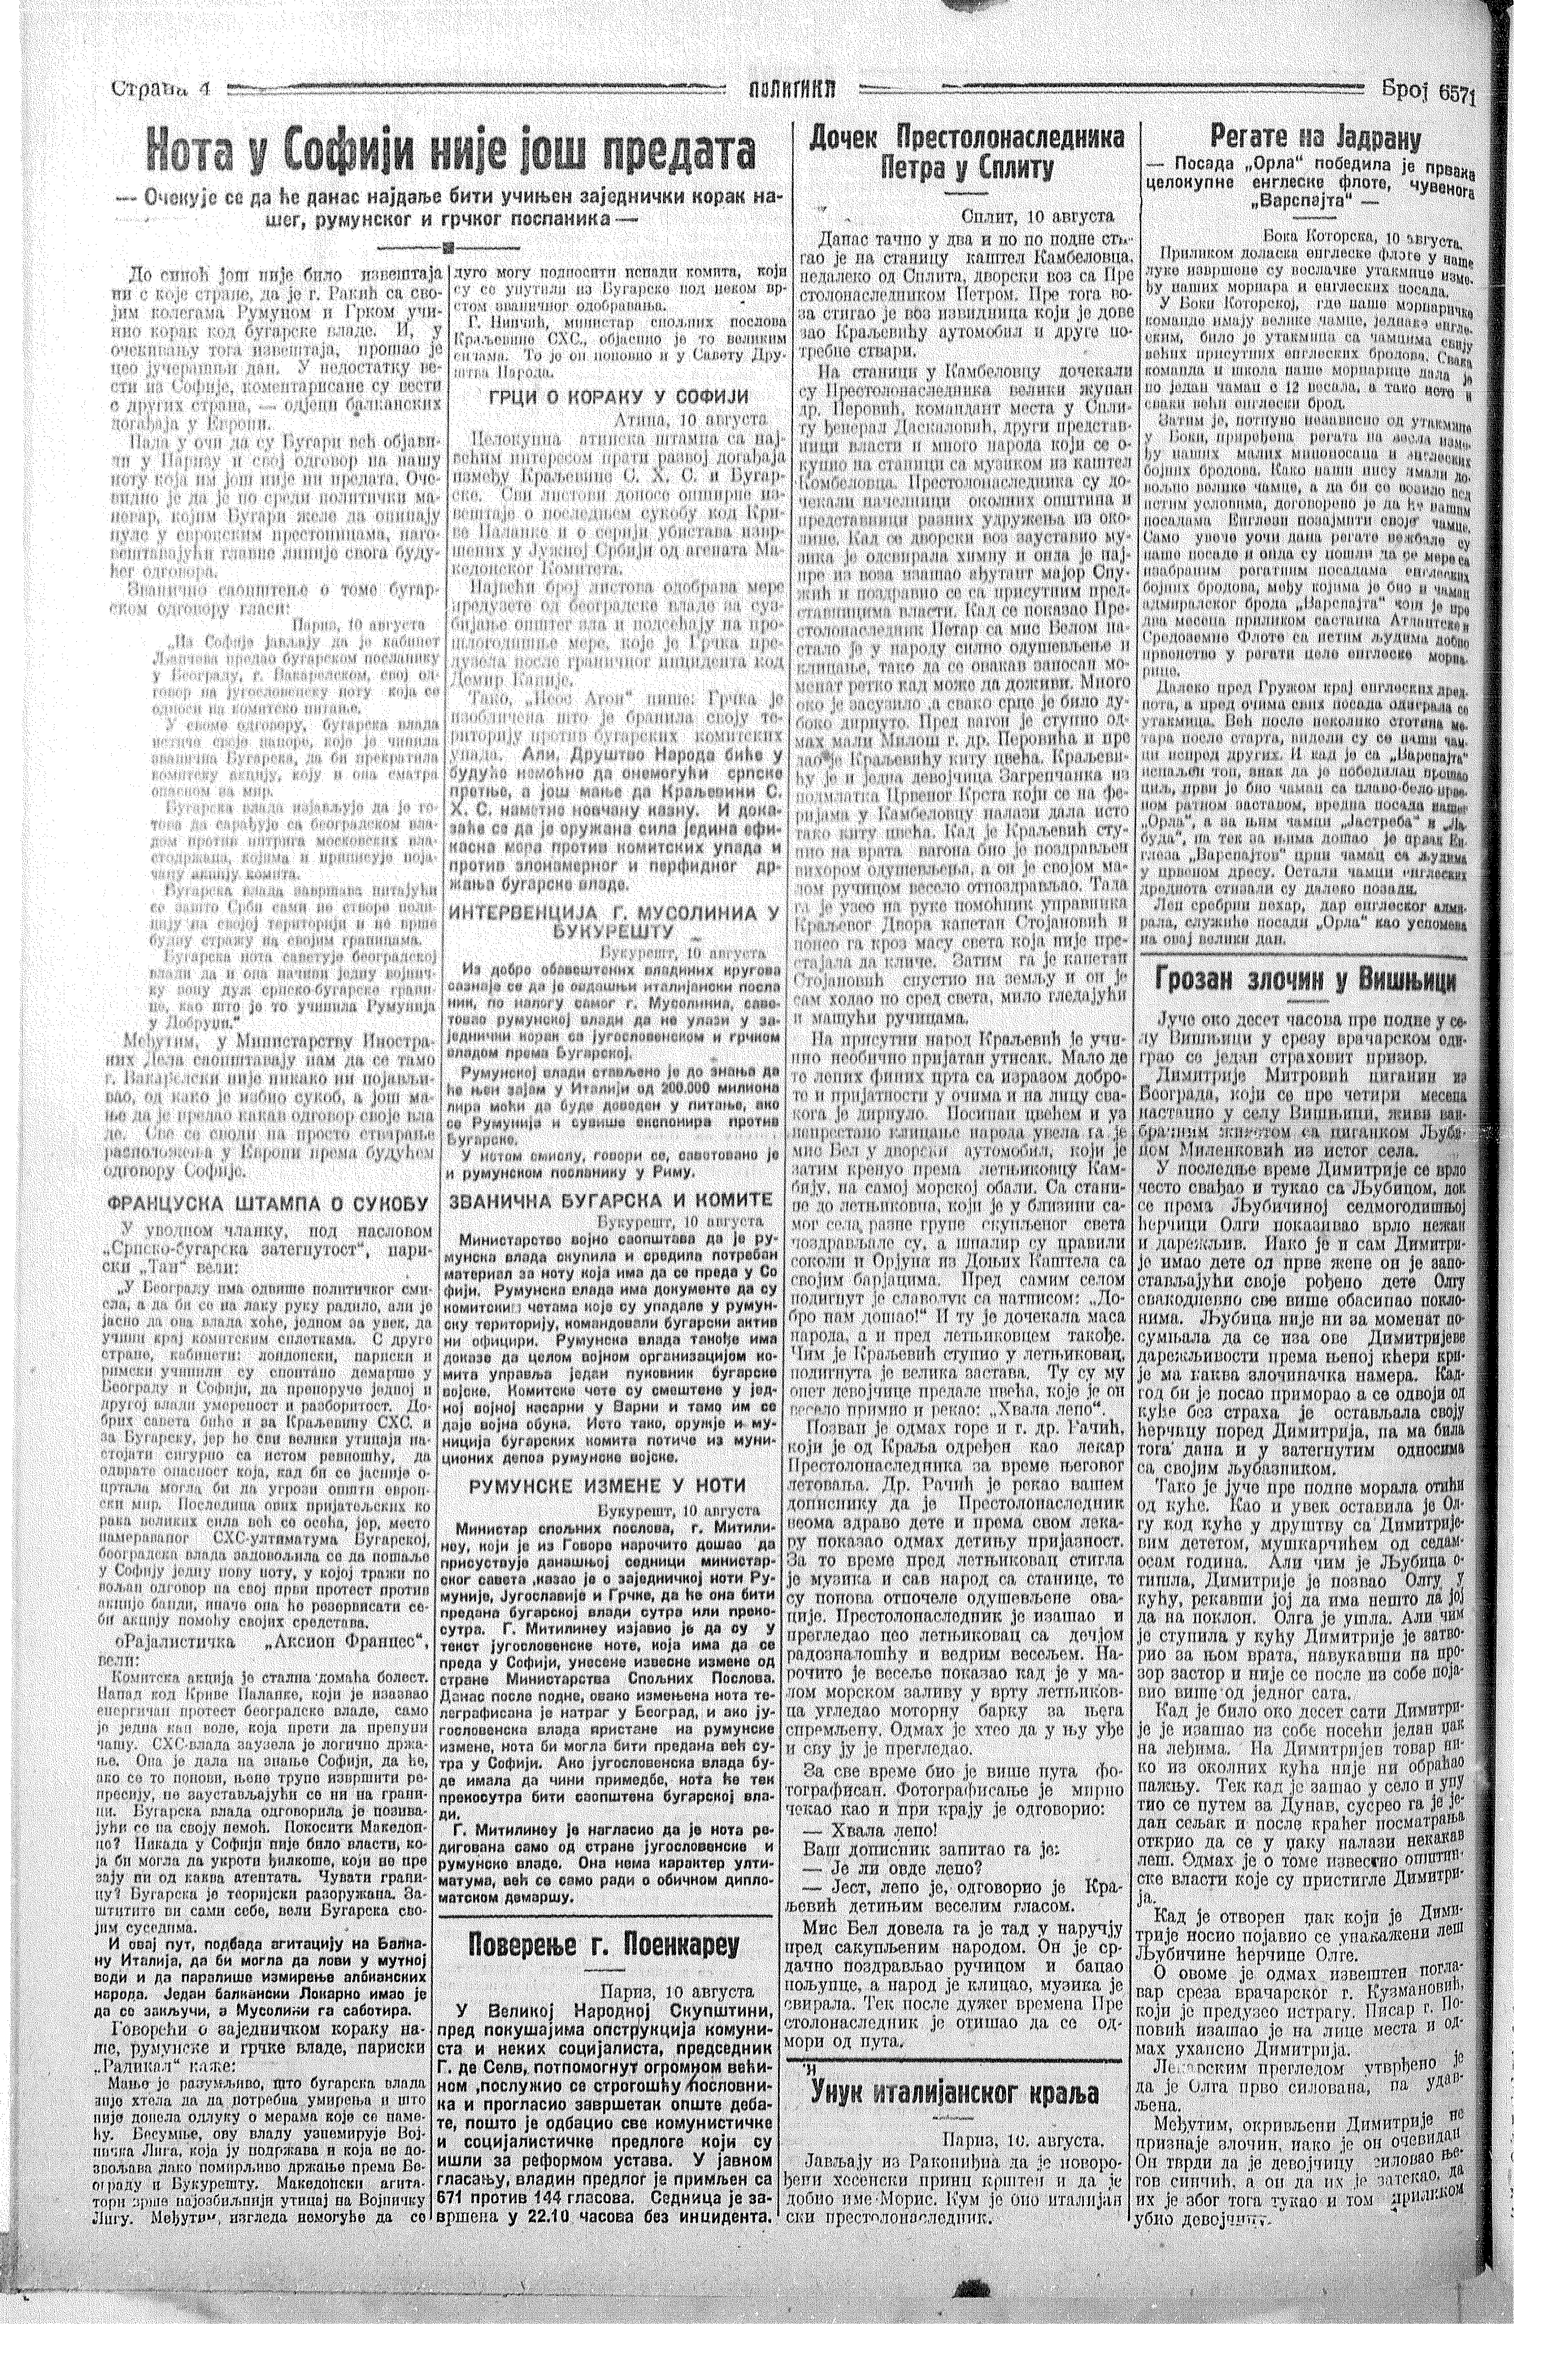 Grozan zločin u Višnjici, Politika, 11.08.1926.